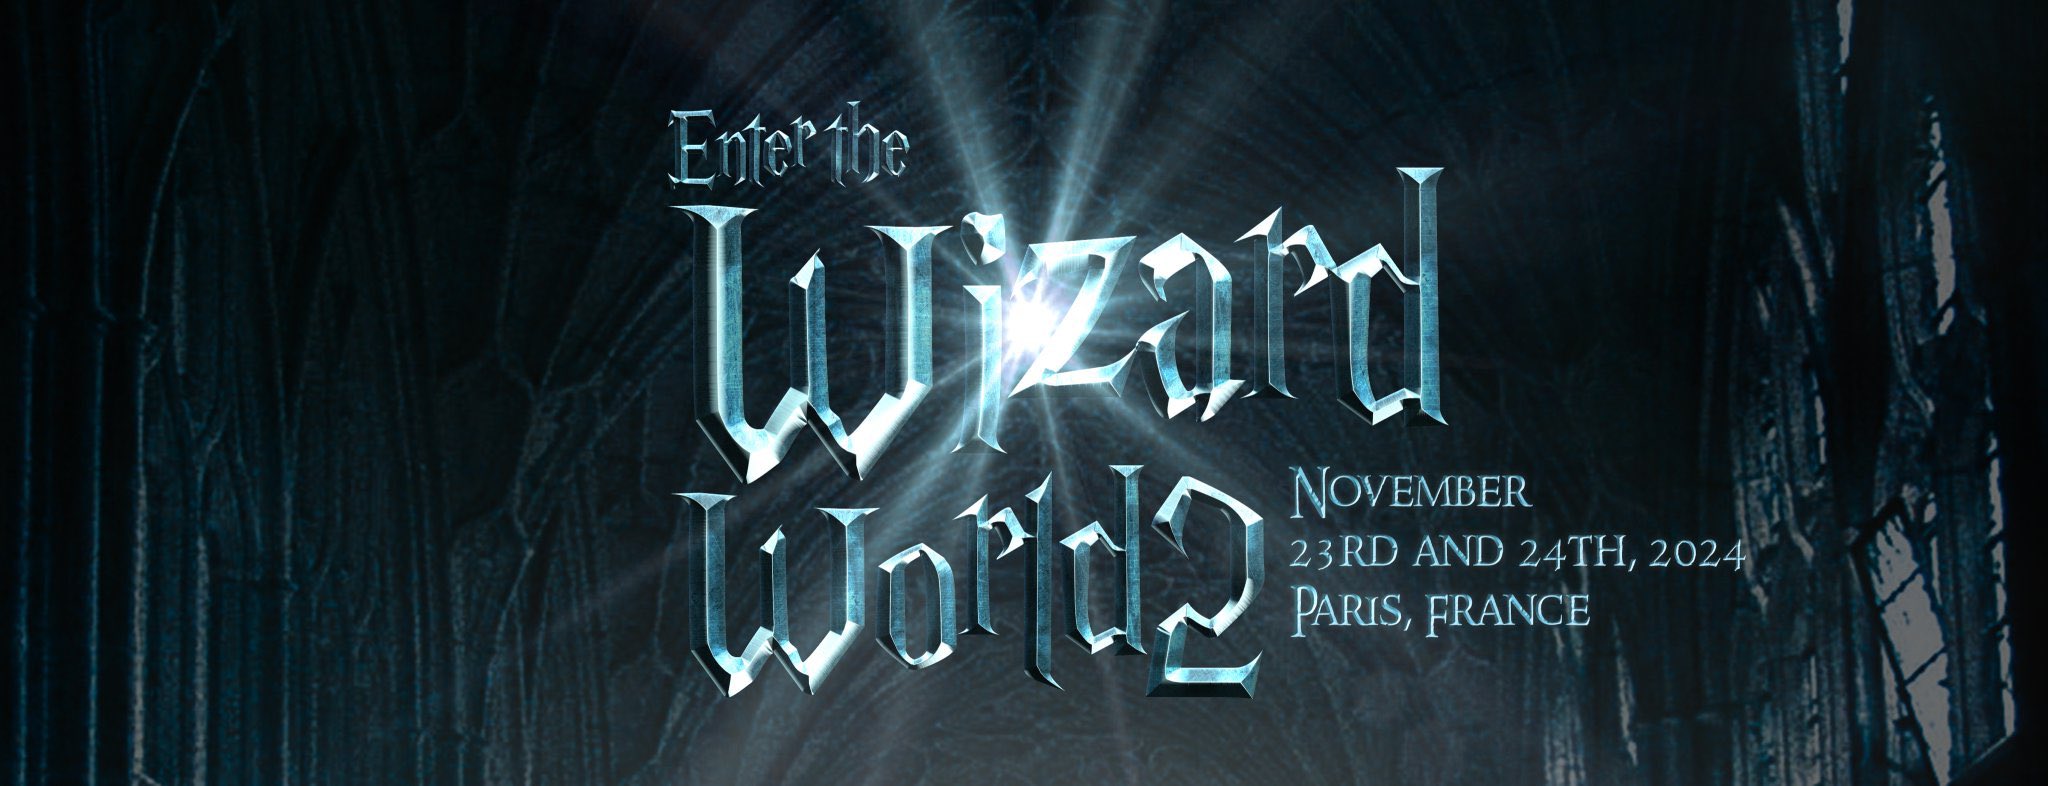 Enter the Wizard World 2